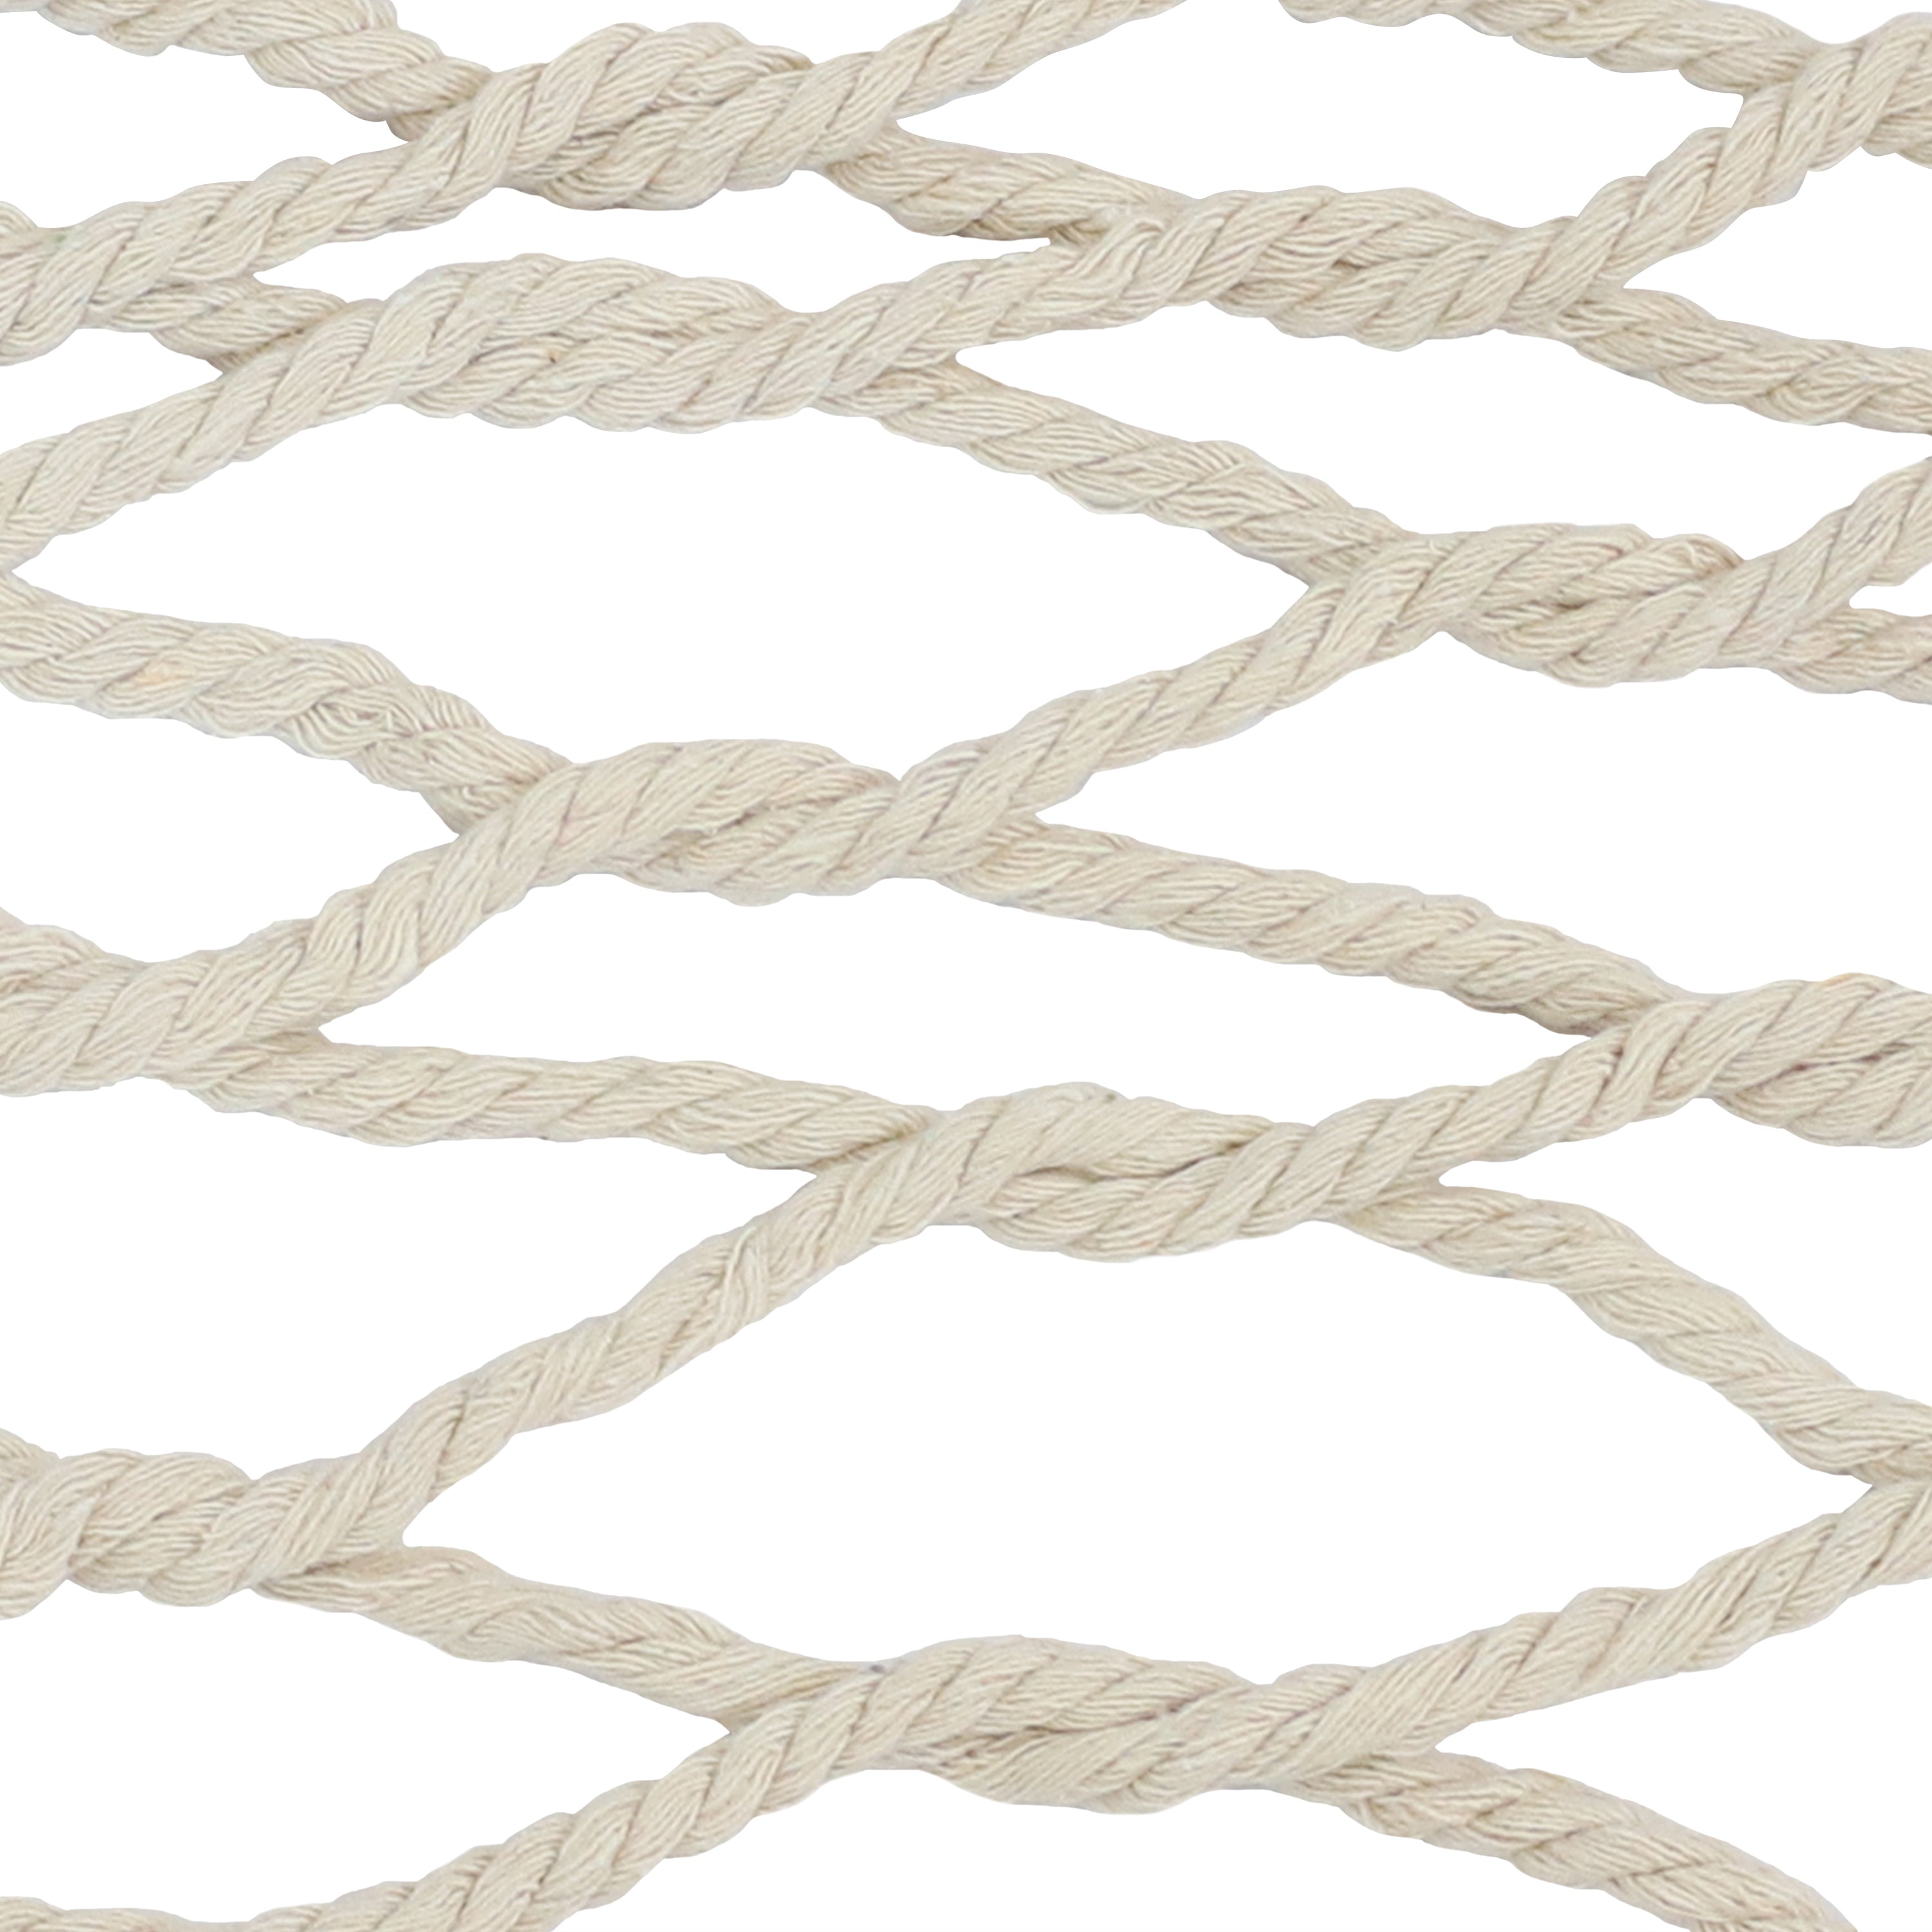 Cotton Rope Double Hammock | Spreader Bars | 450lb Capacity